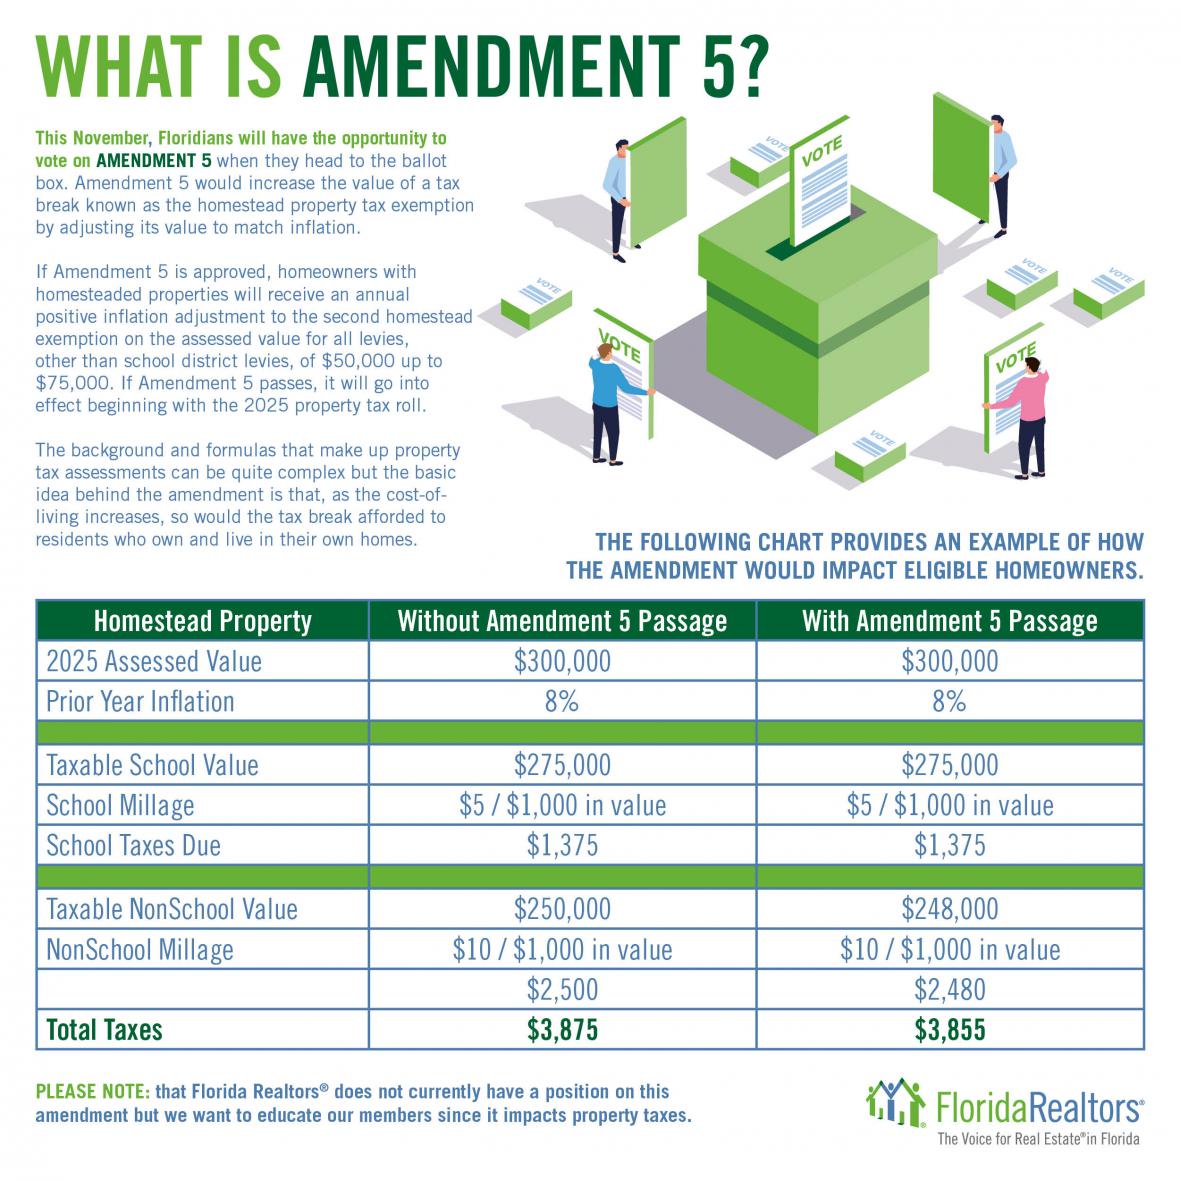 What is Amendment 5?